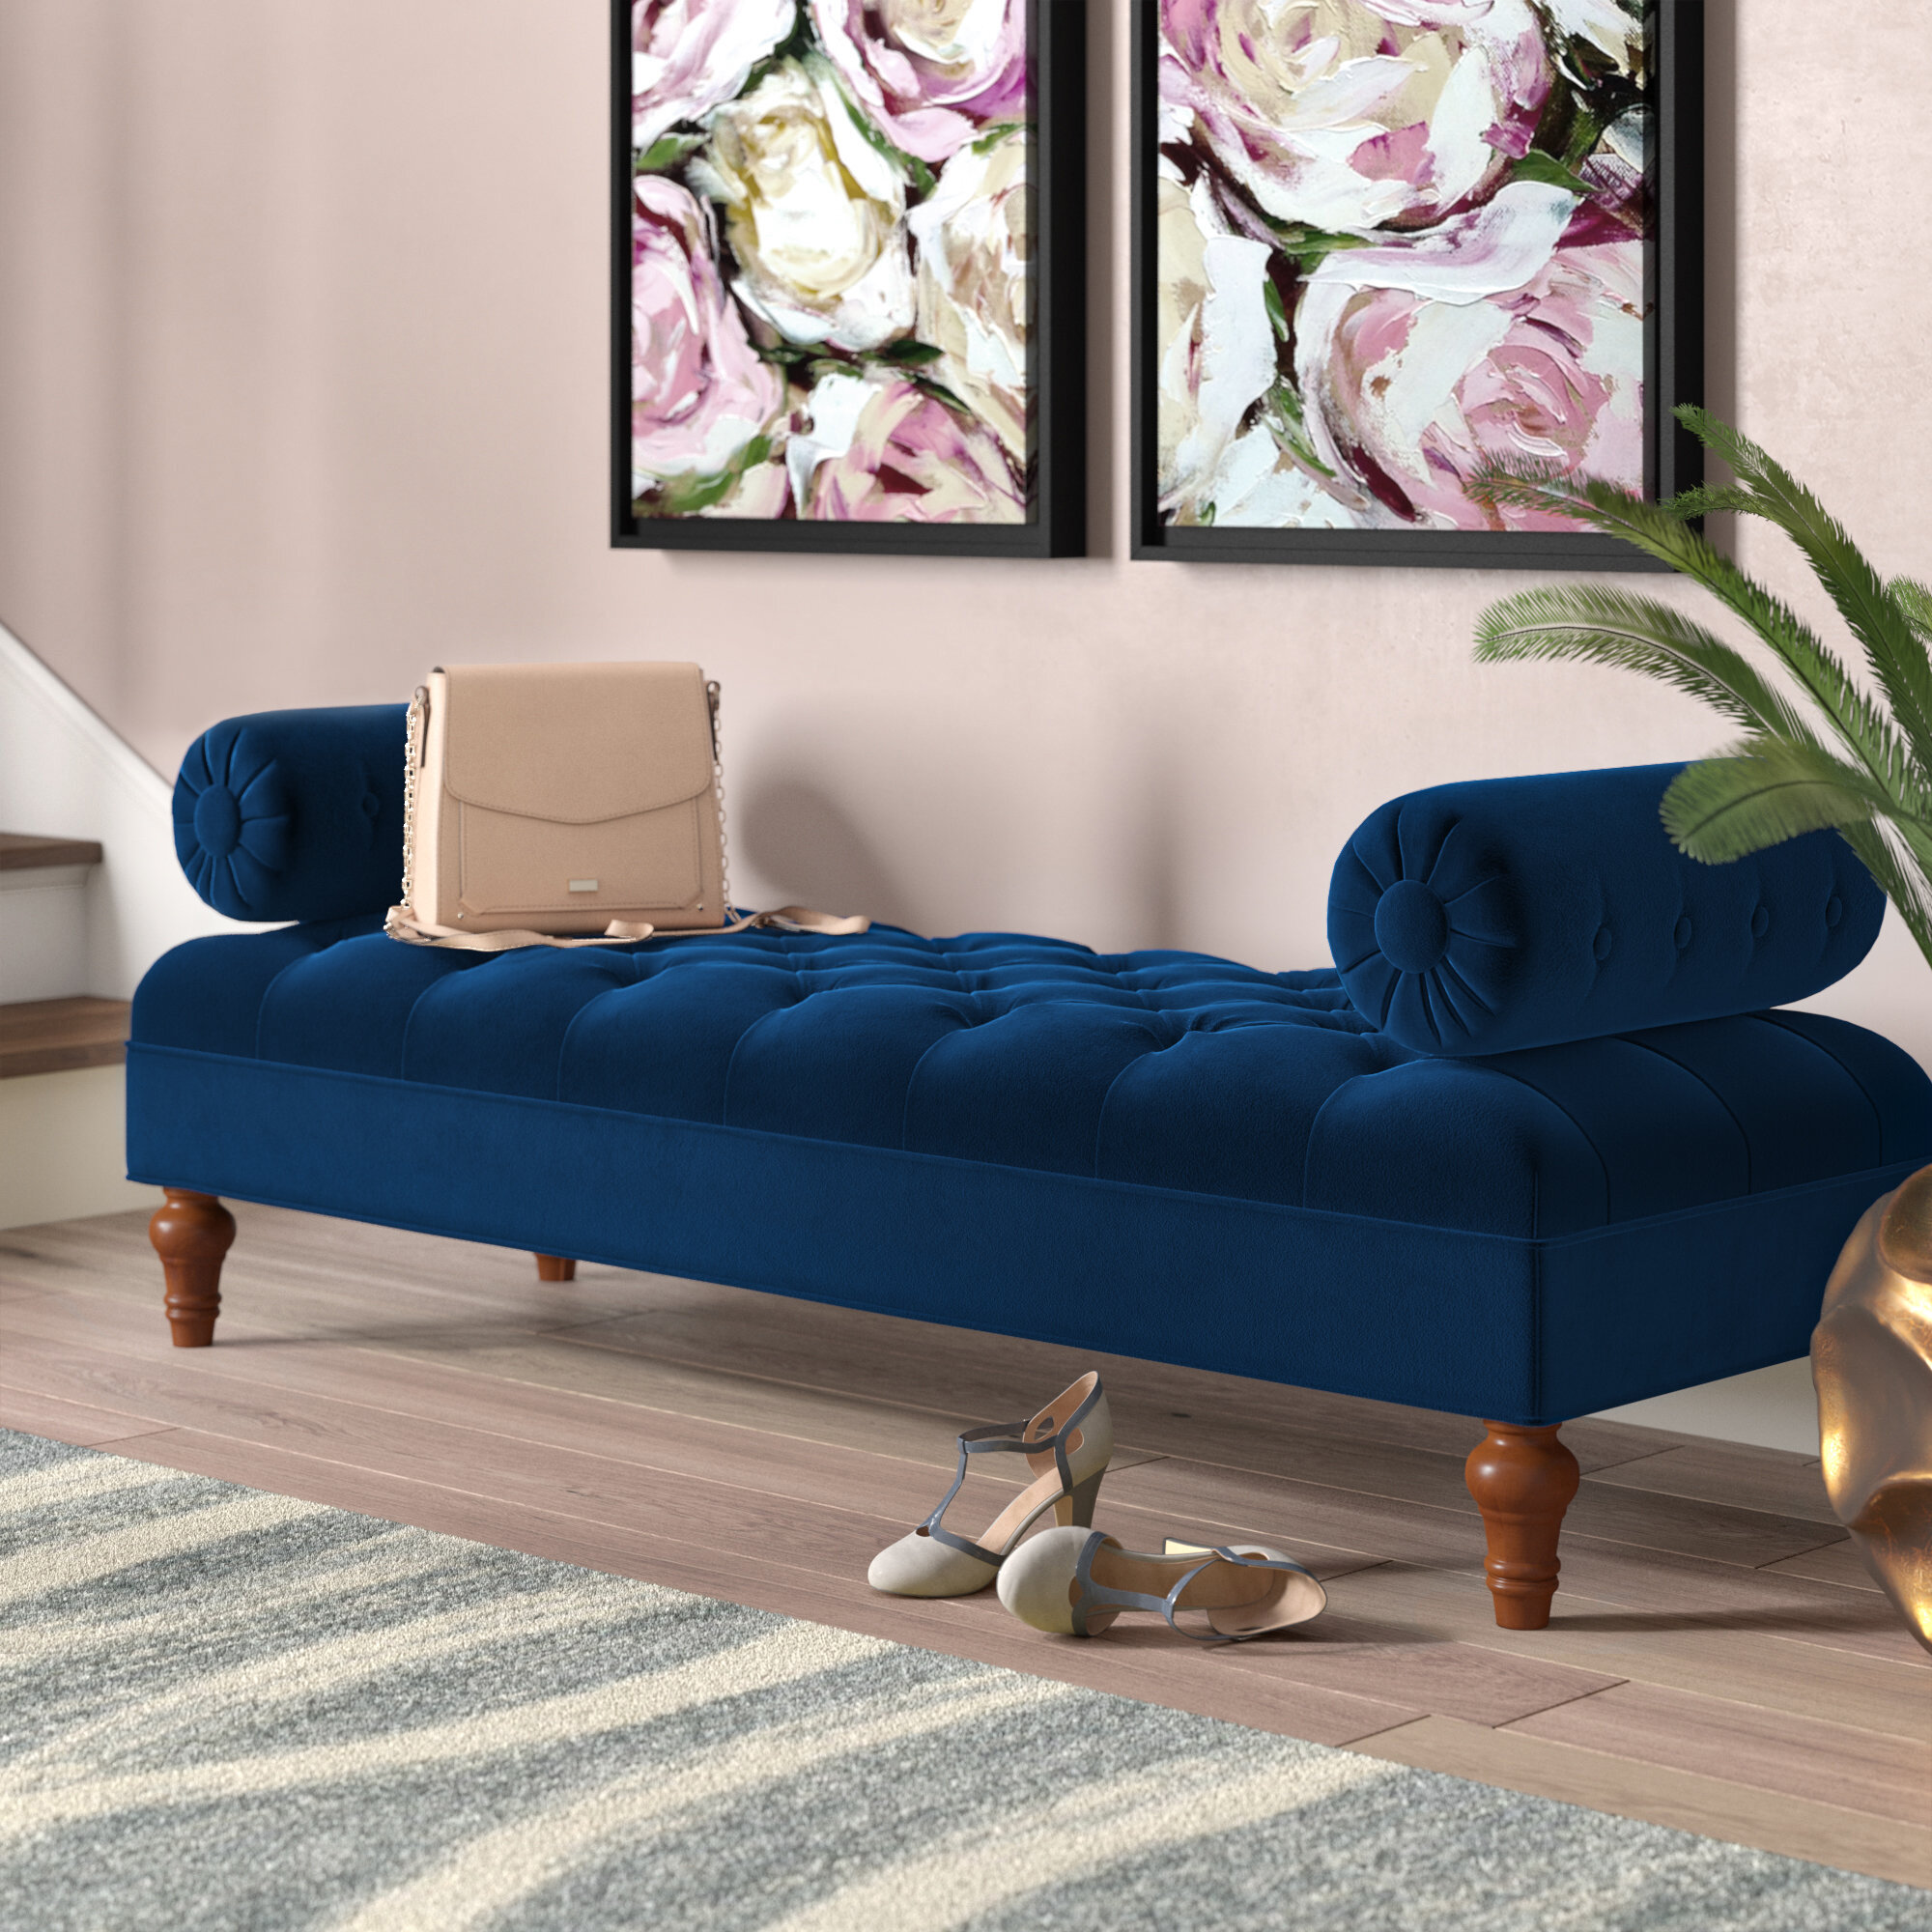 26+ Upholstered Bench Living Room Gif